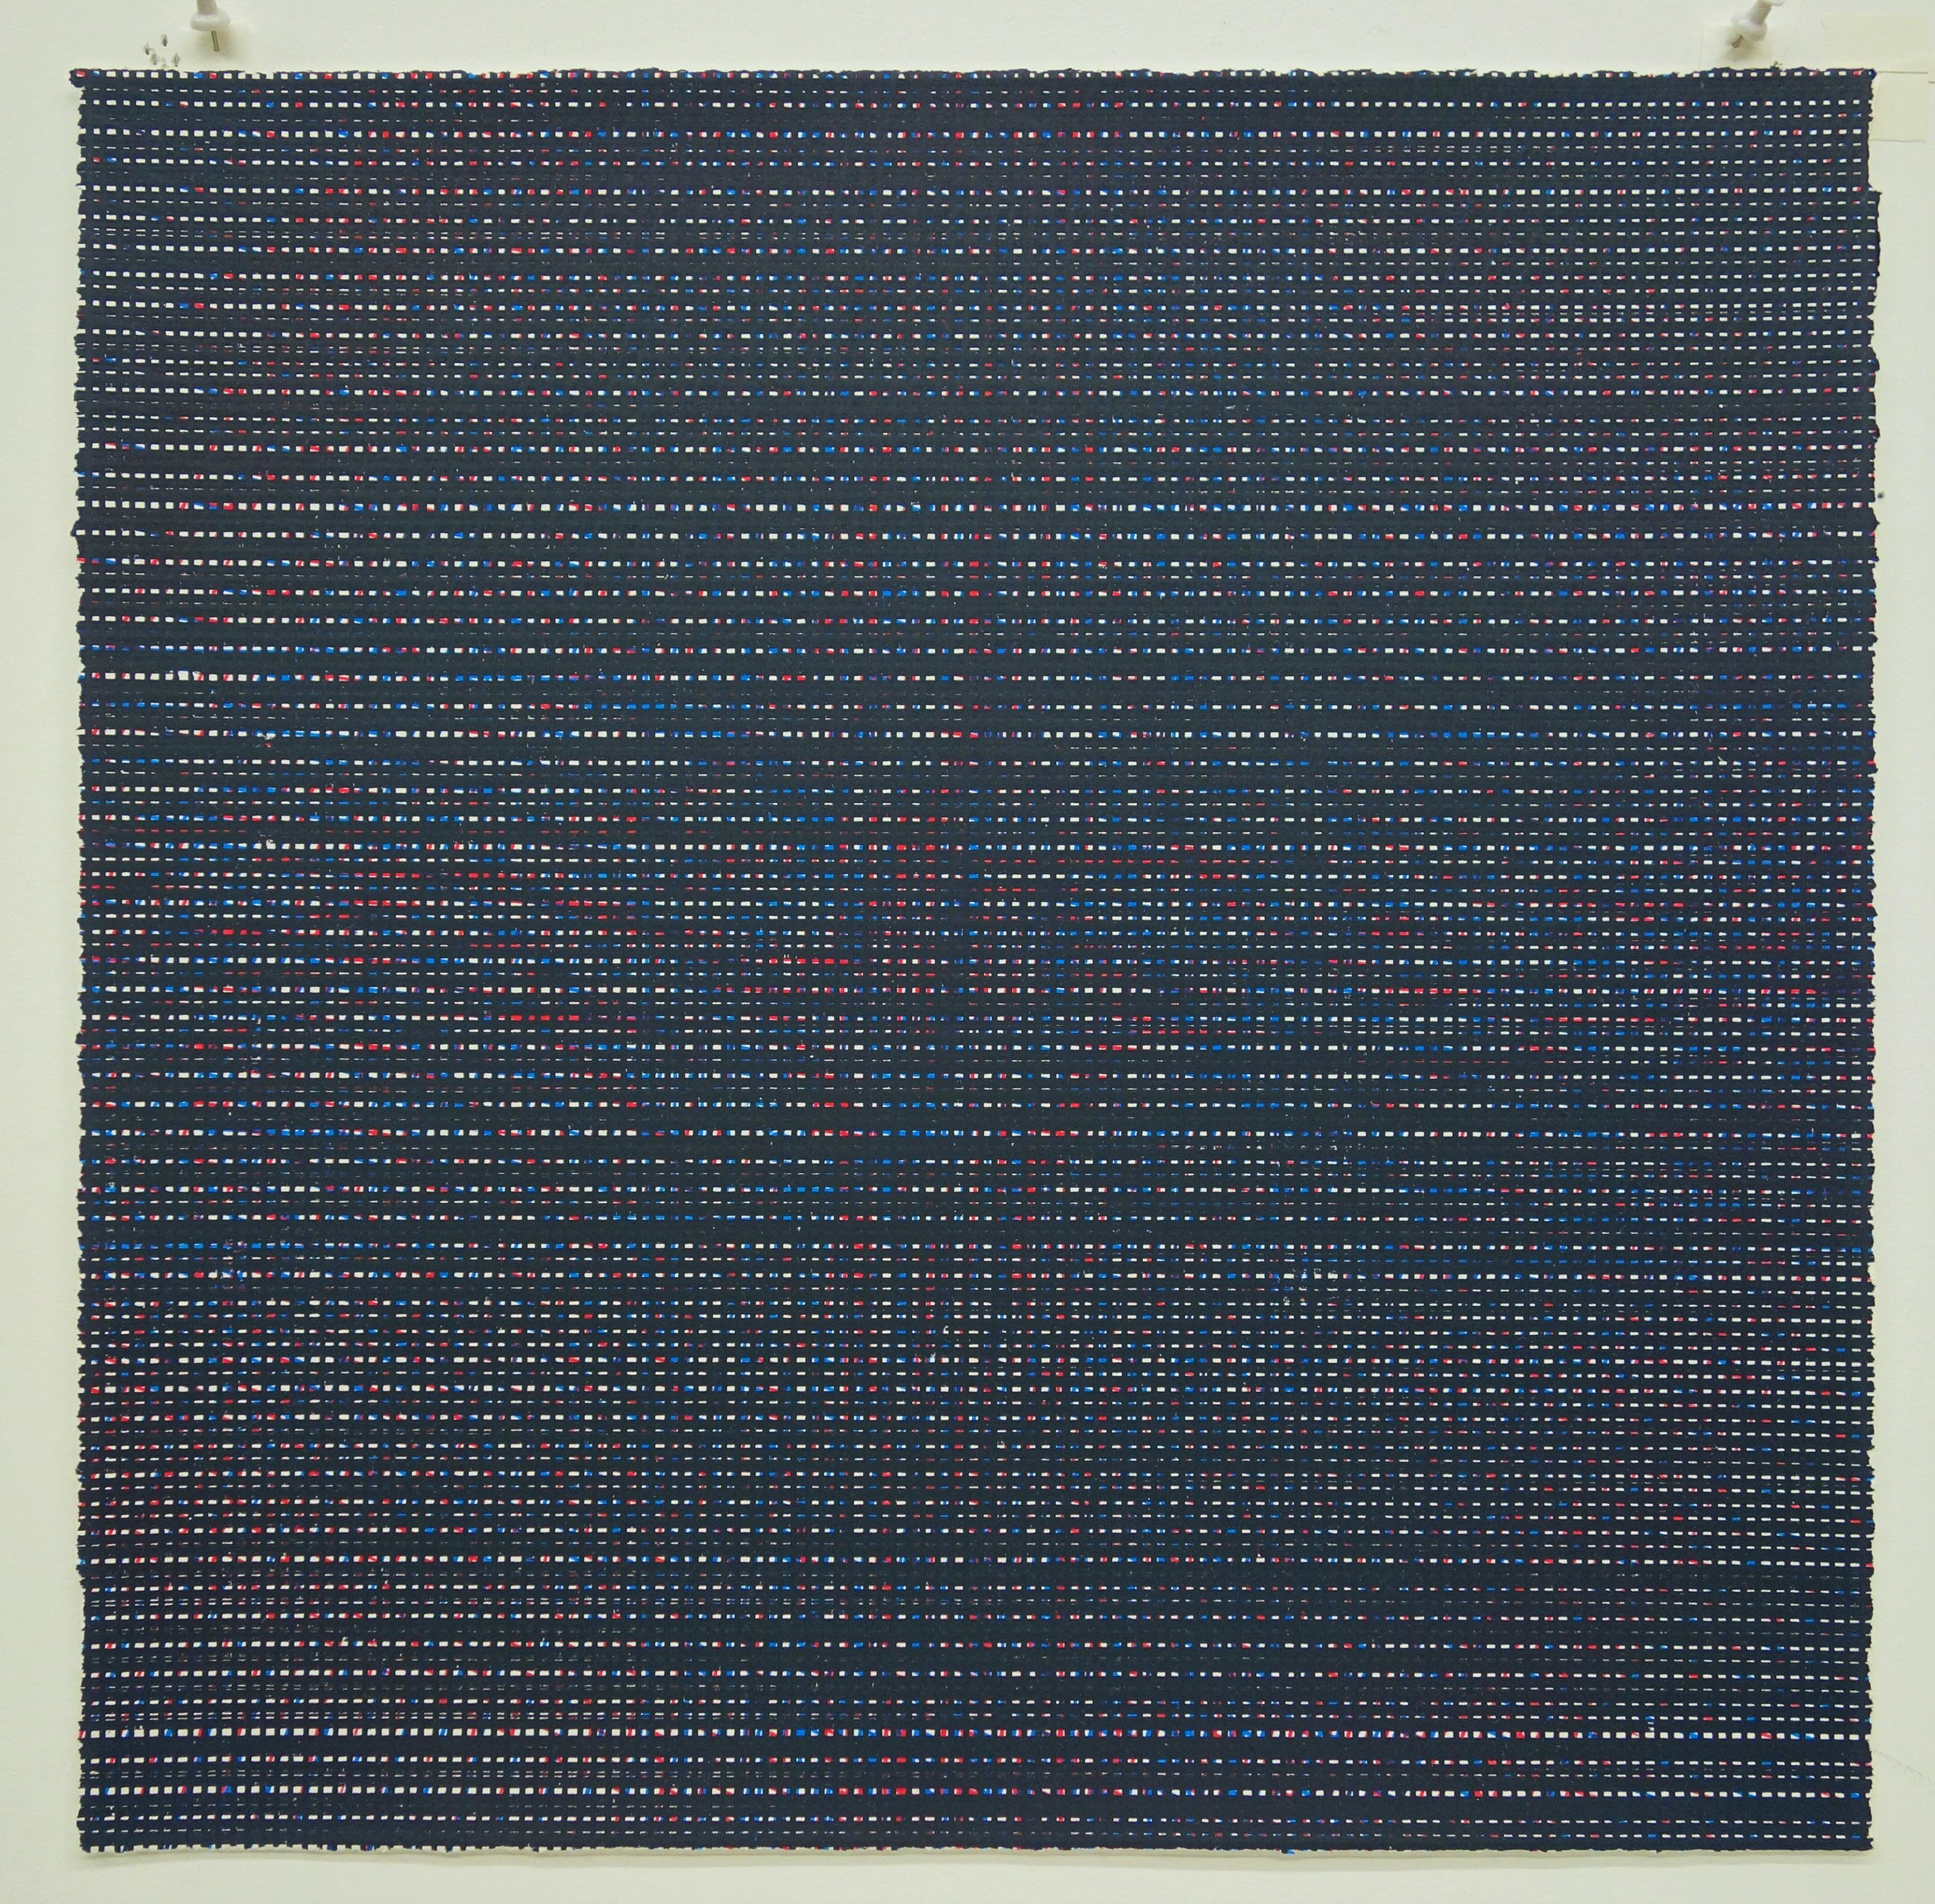 Rob de Oude, Untitled-Wassaic 10, 2016, silkscreen, 18 x 18 inches, Suite of 10 9